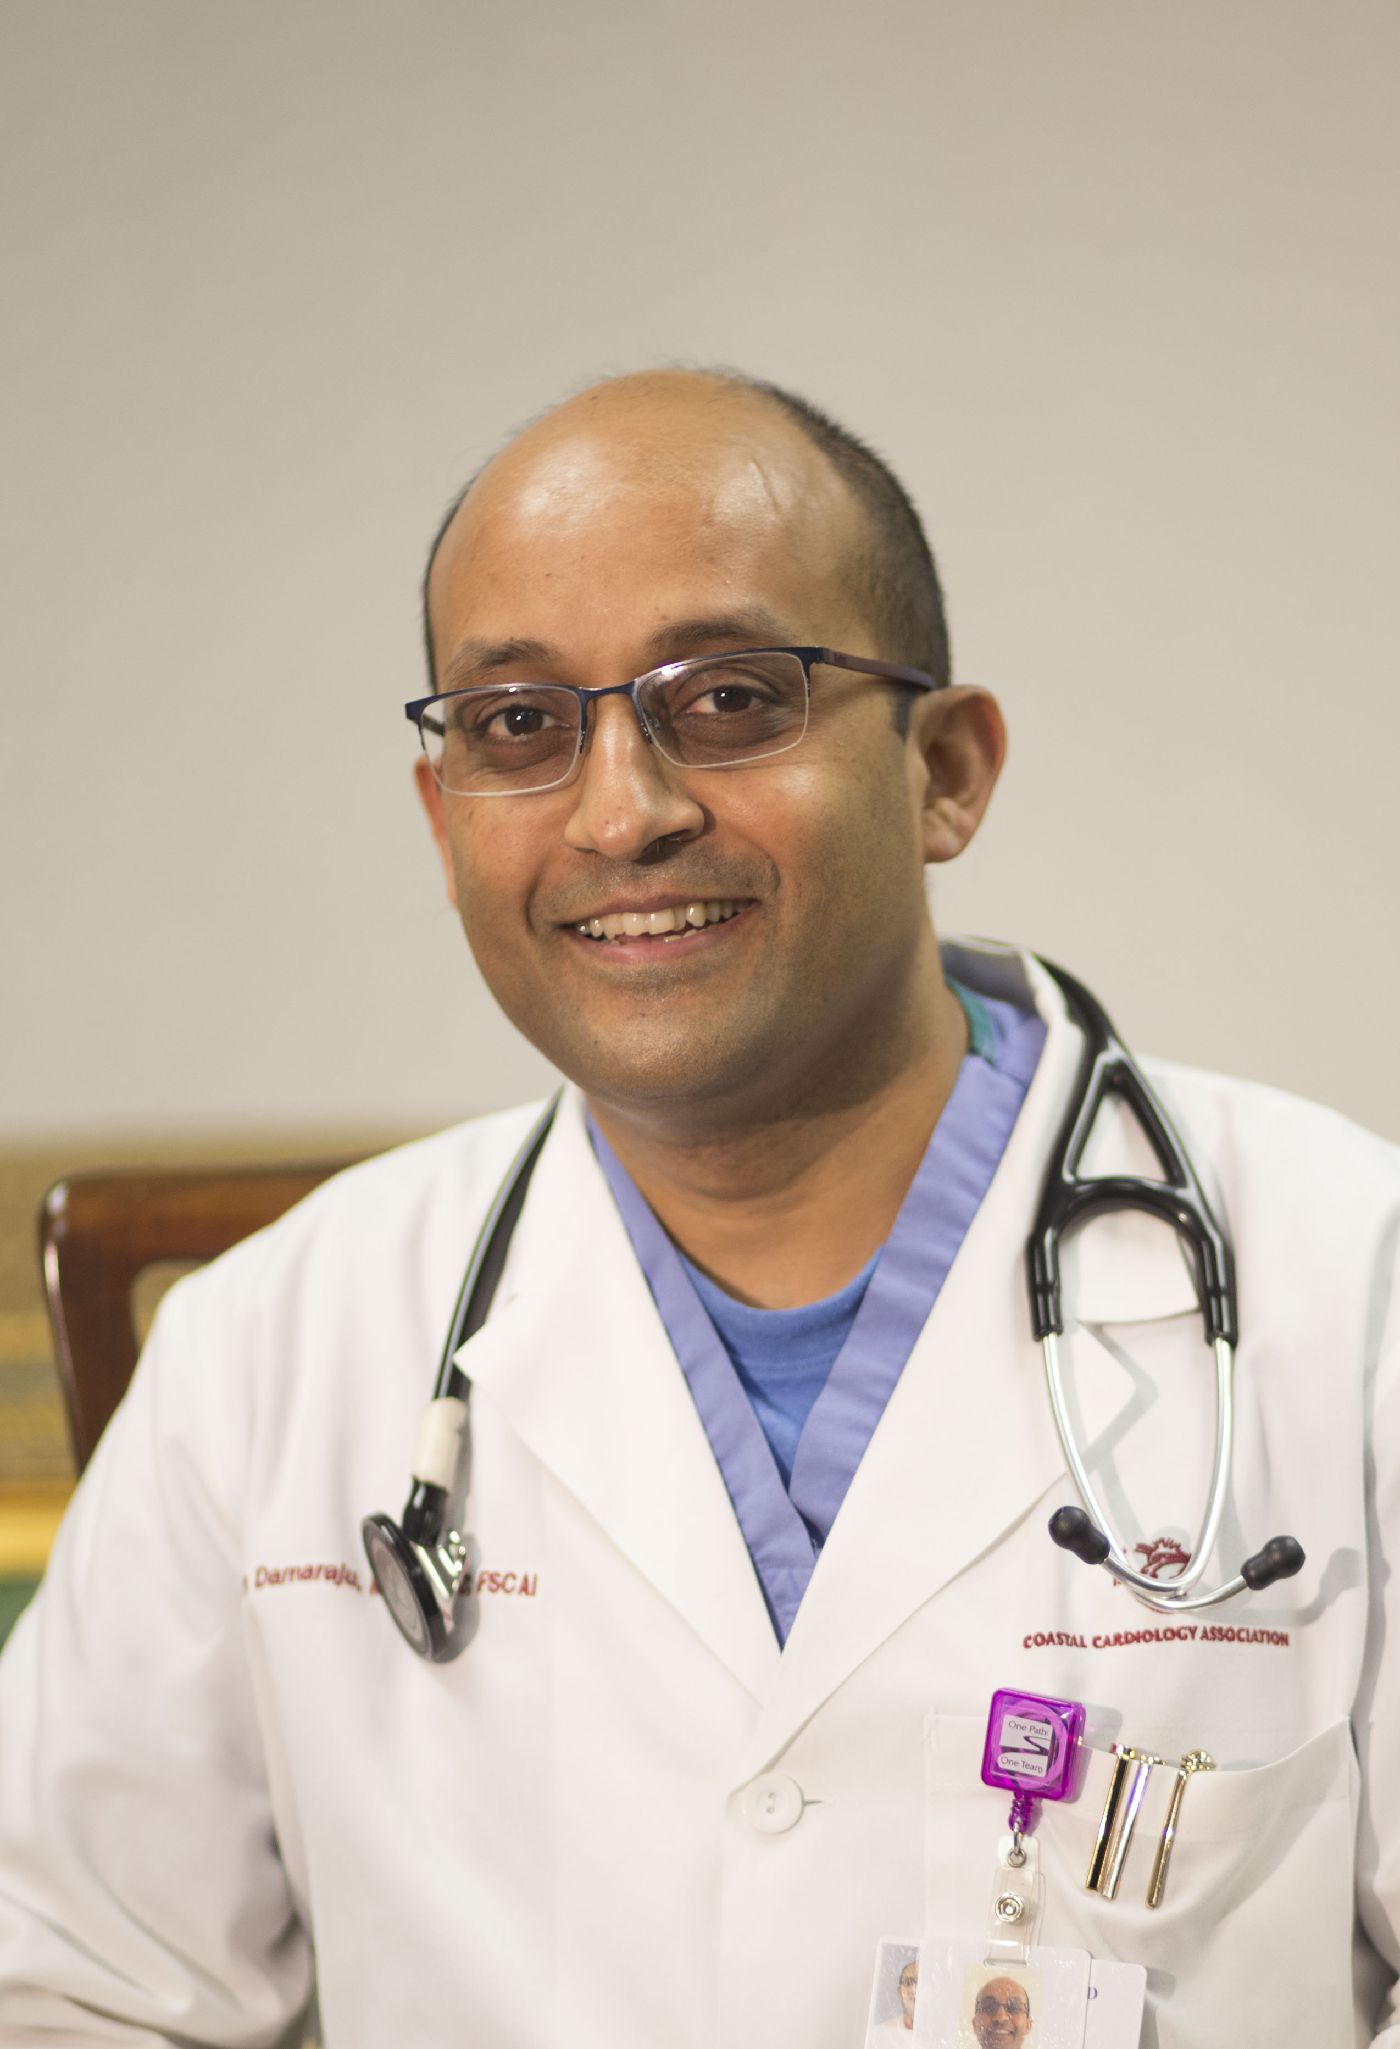 Dr. Damaraju - Cardiologist at Coastal Cardiology Association